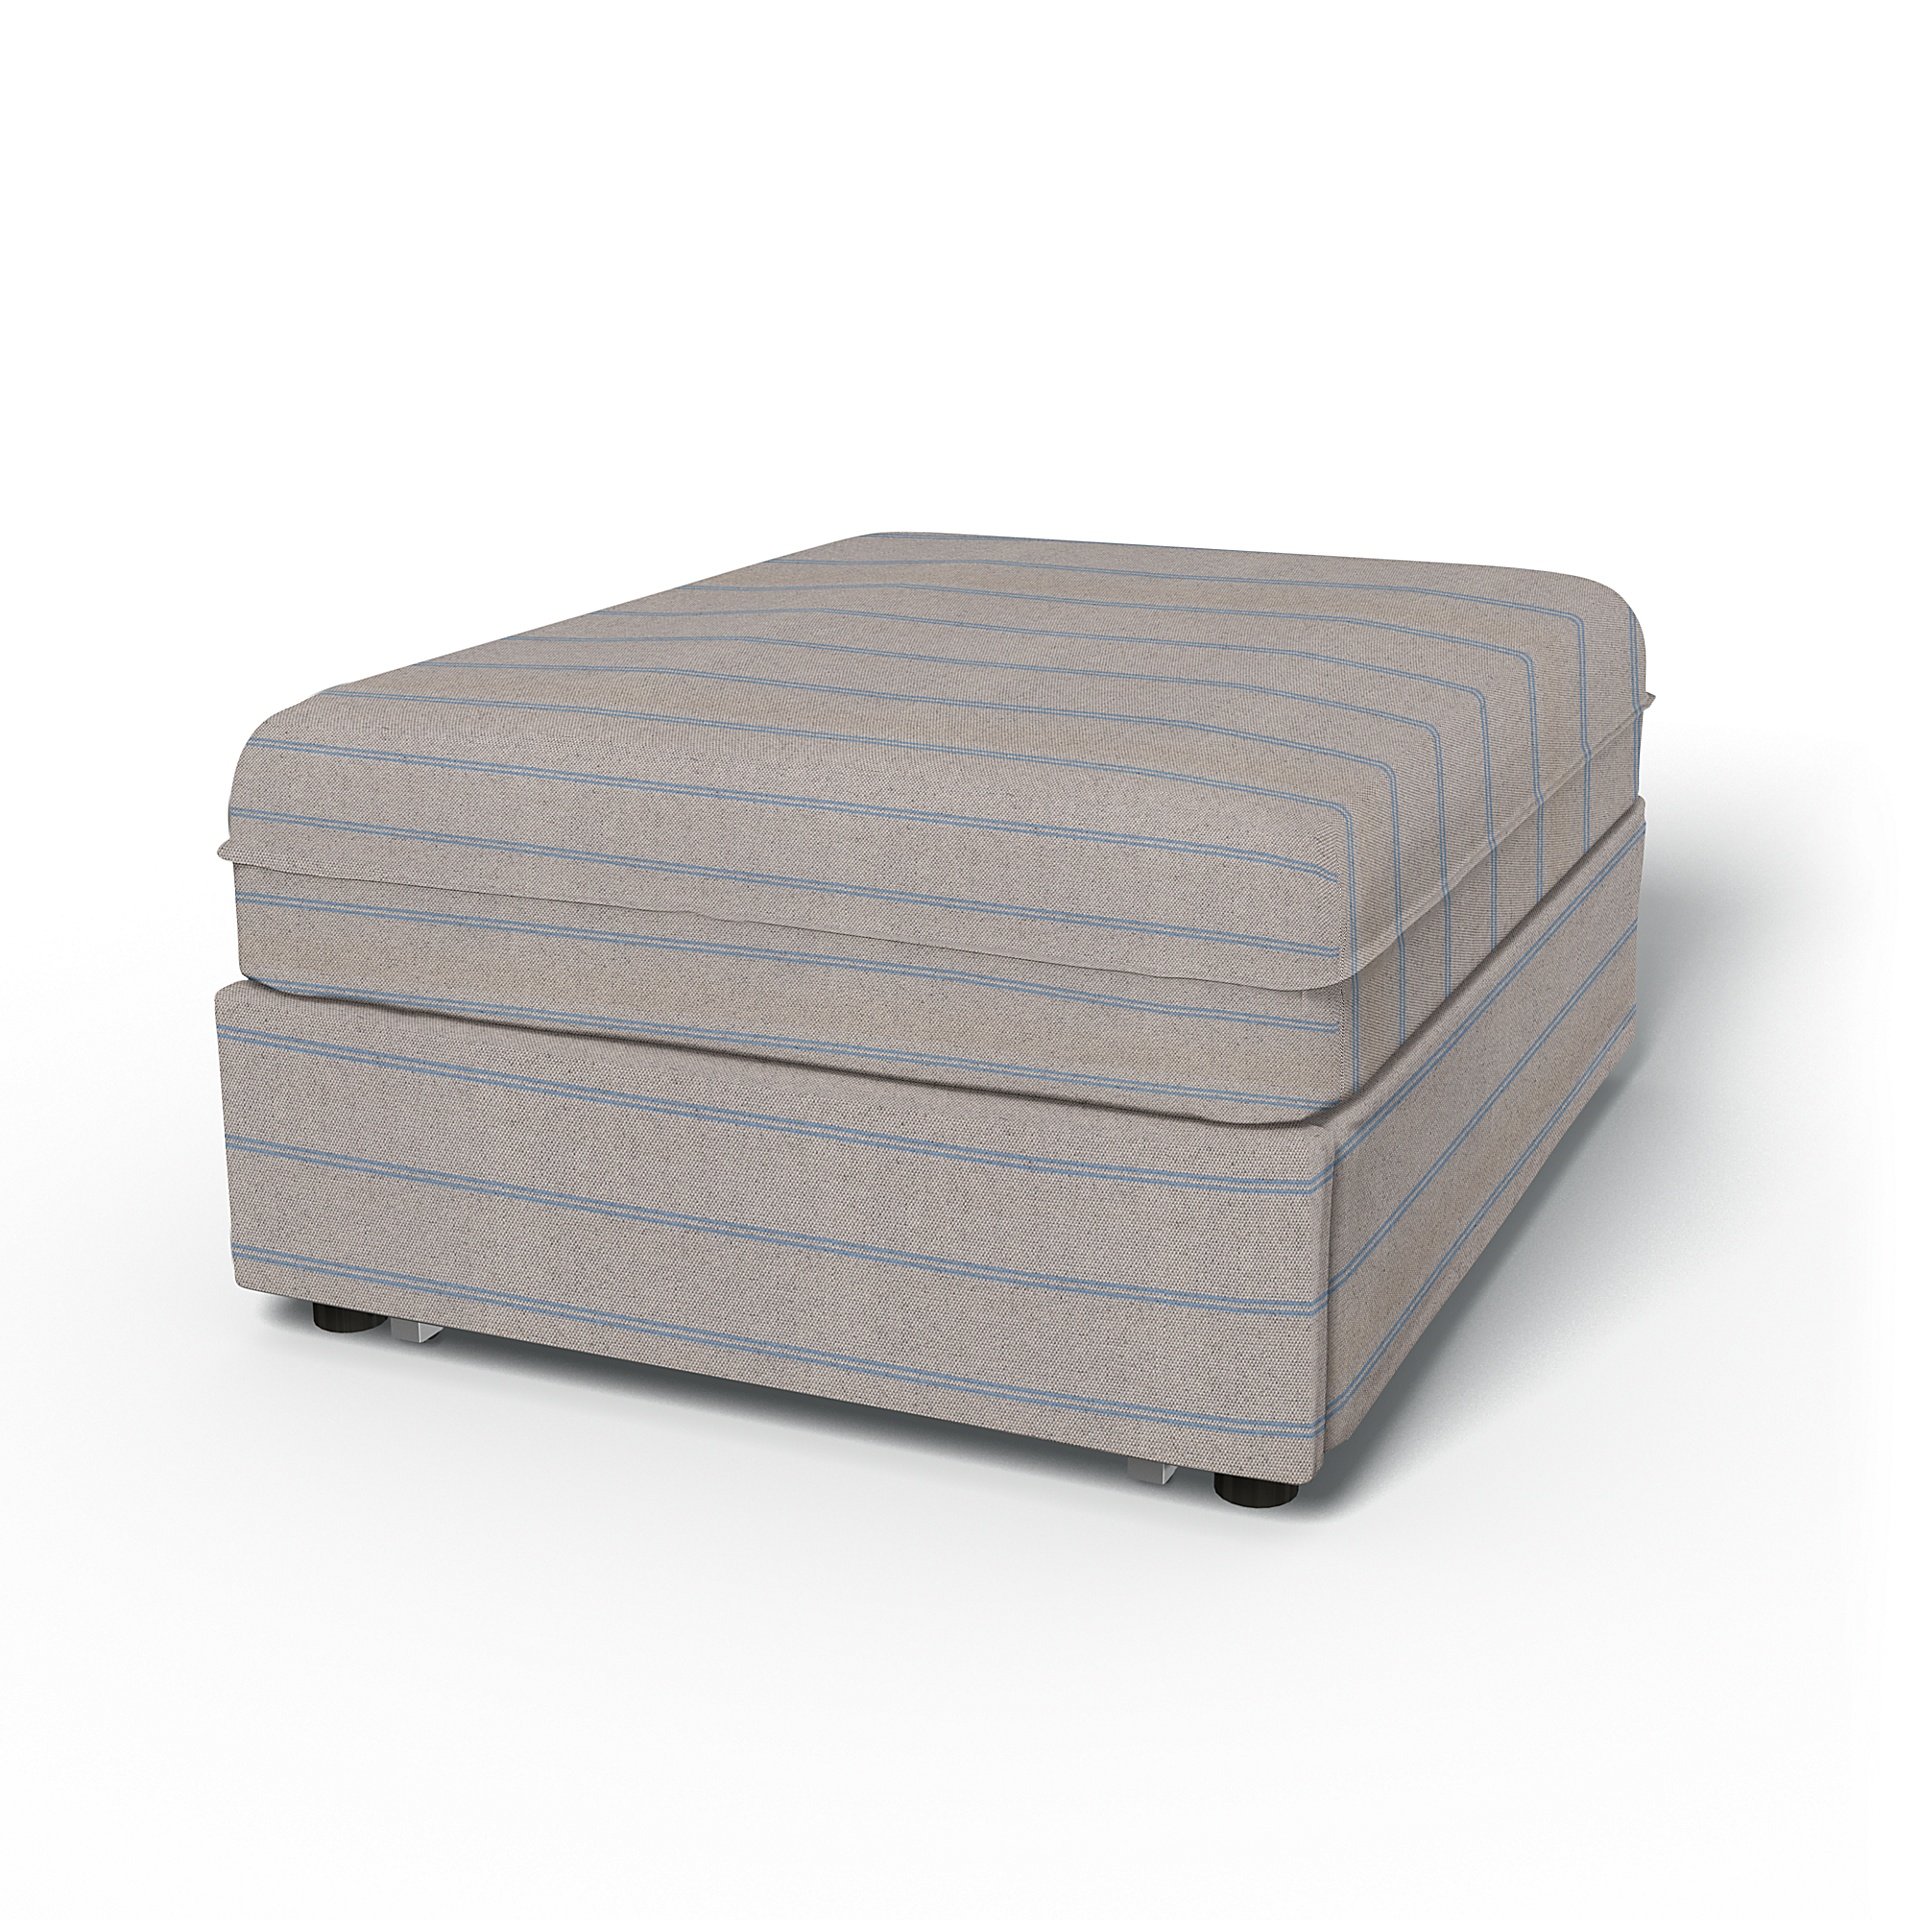 IKEA - Vallentuna Seat Module with Sofa Bed Cover 80x100cm 32x39in, Blue Stripe, Cotton - Bemz